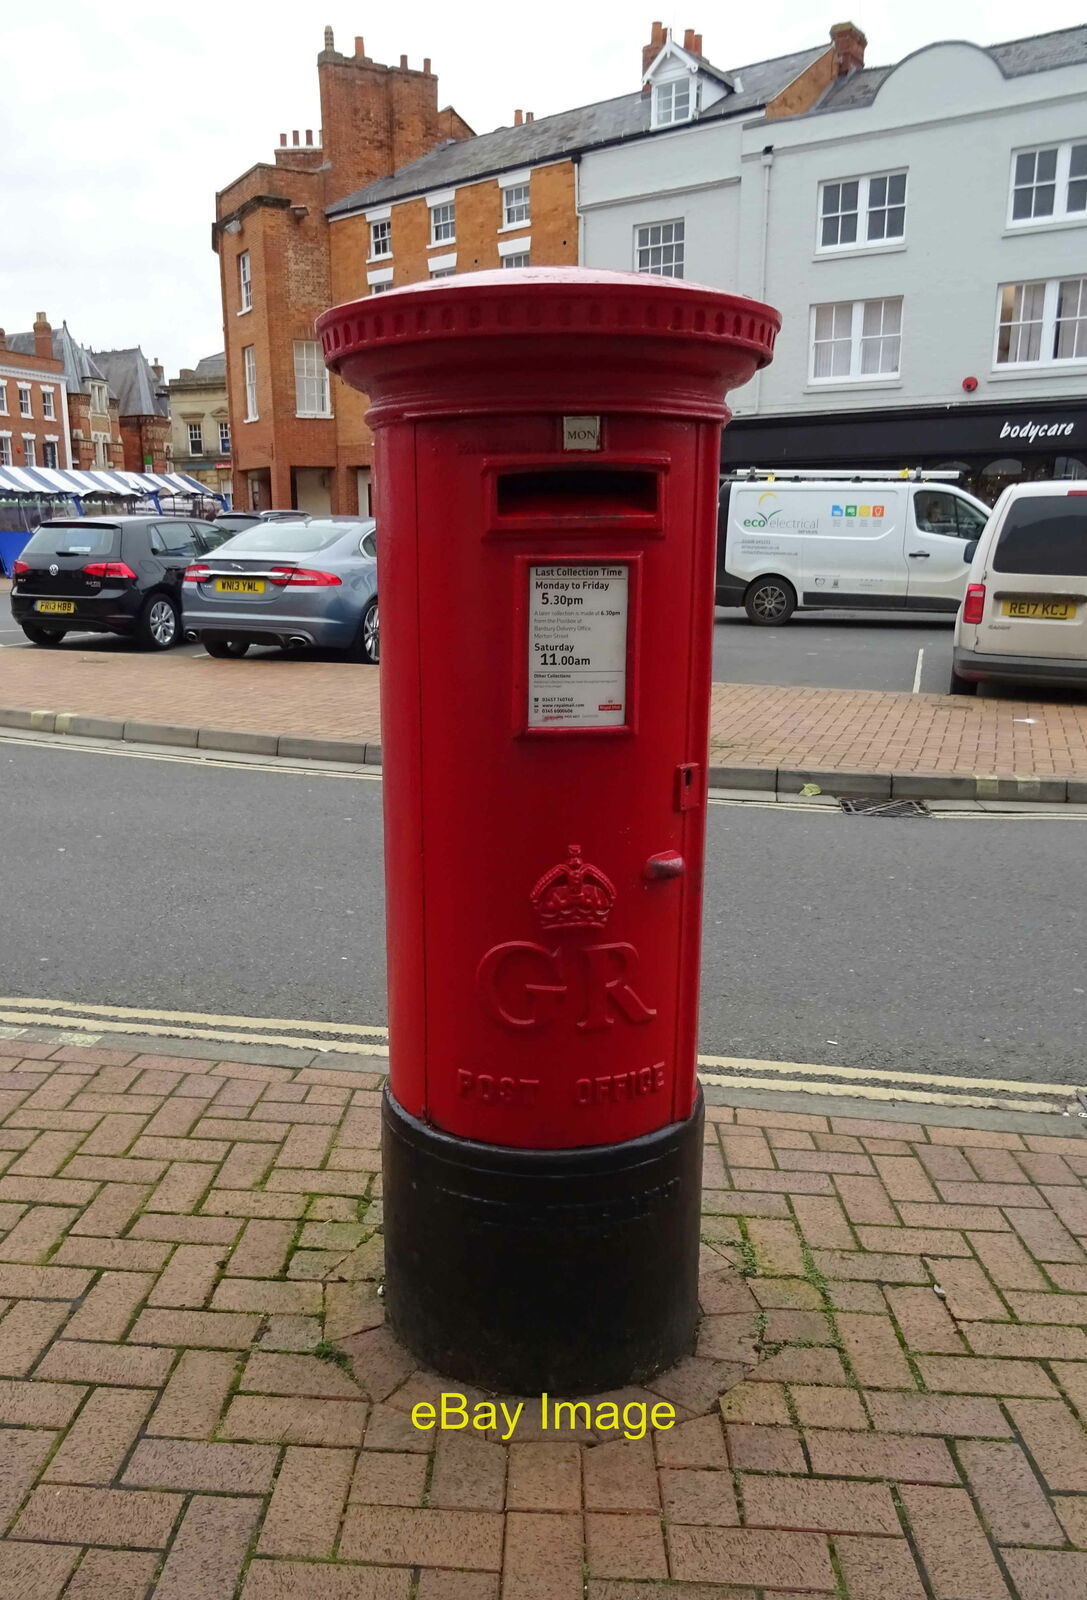 Photo 12x8 George V postbox on Market Place, Banbury Postbox No. OX16 1017 c2019